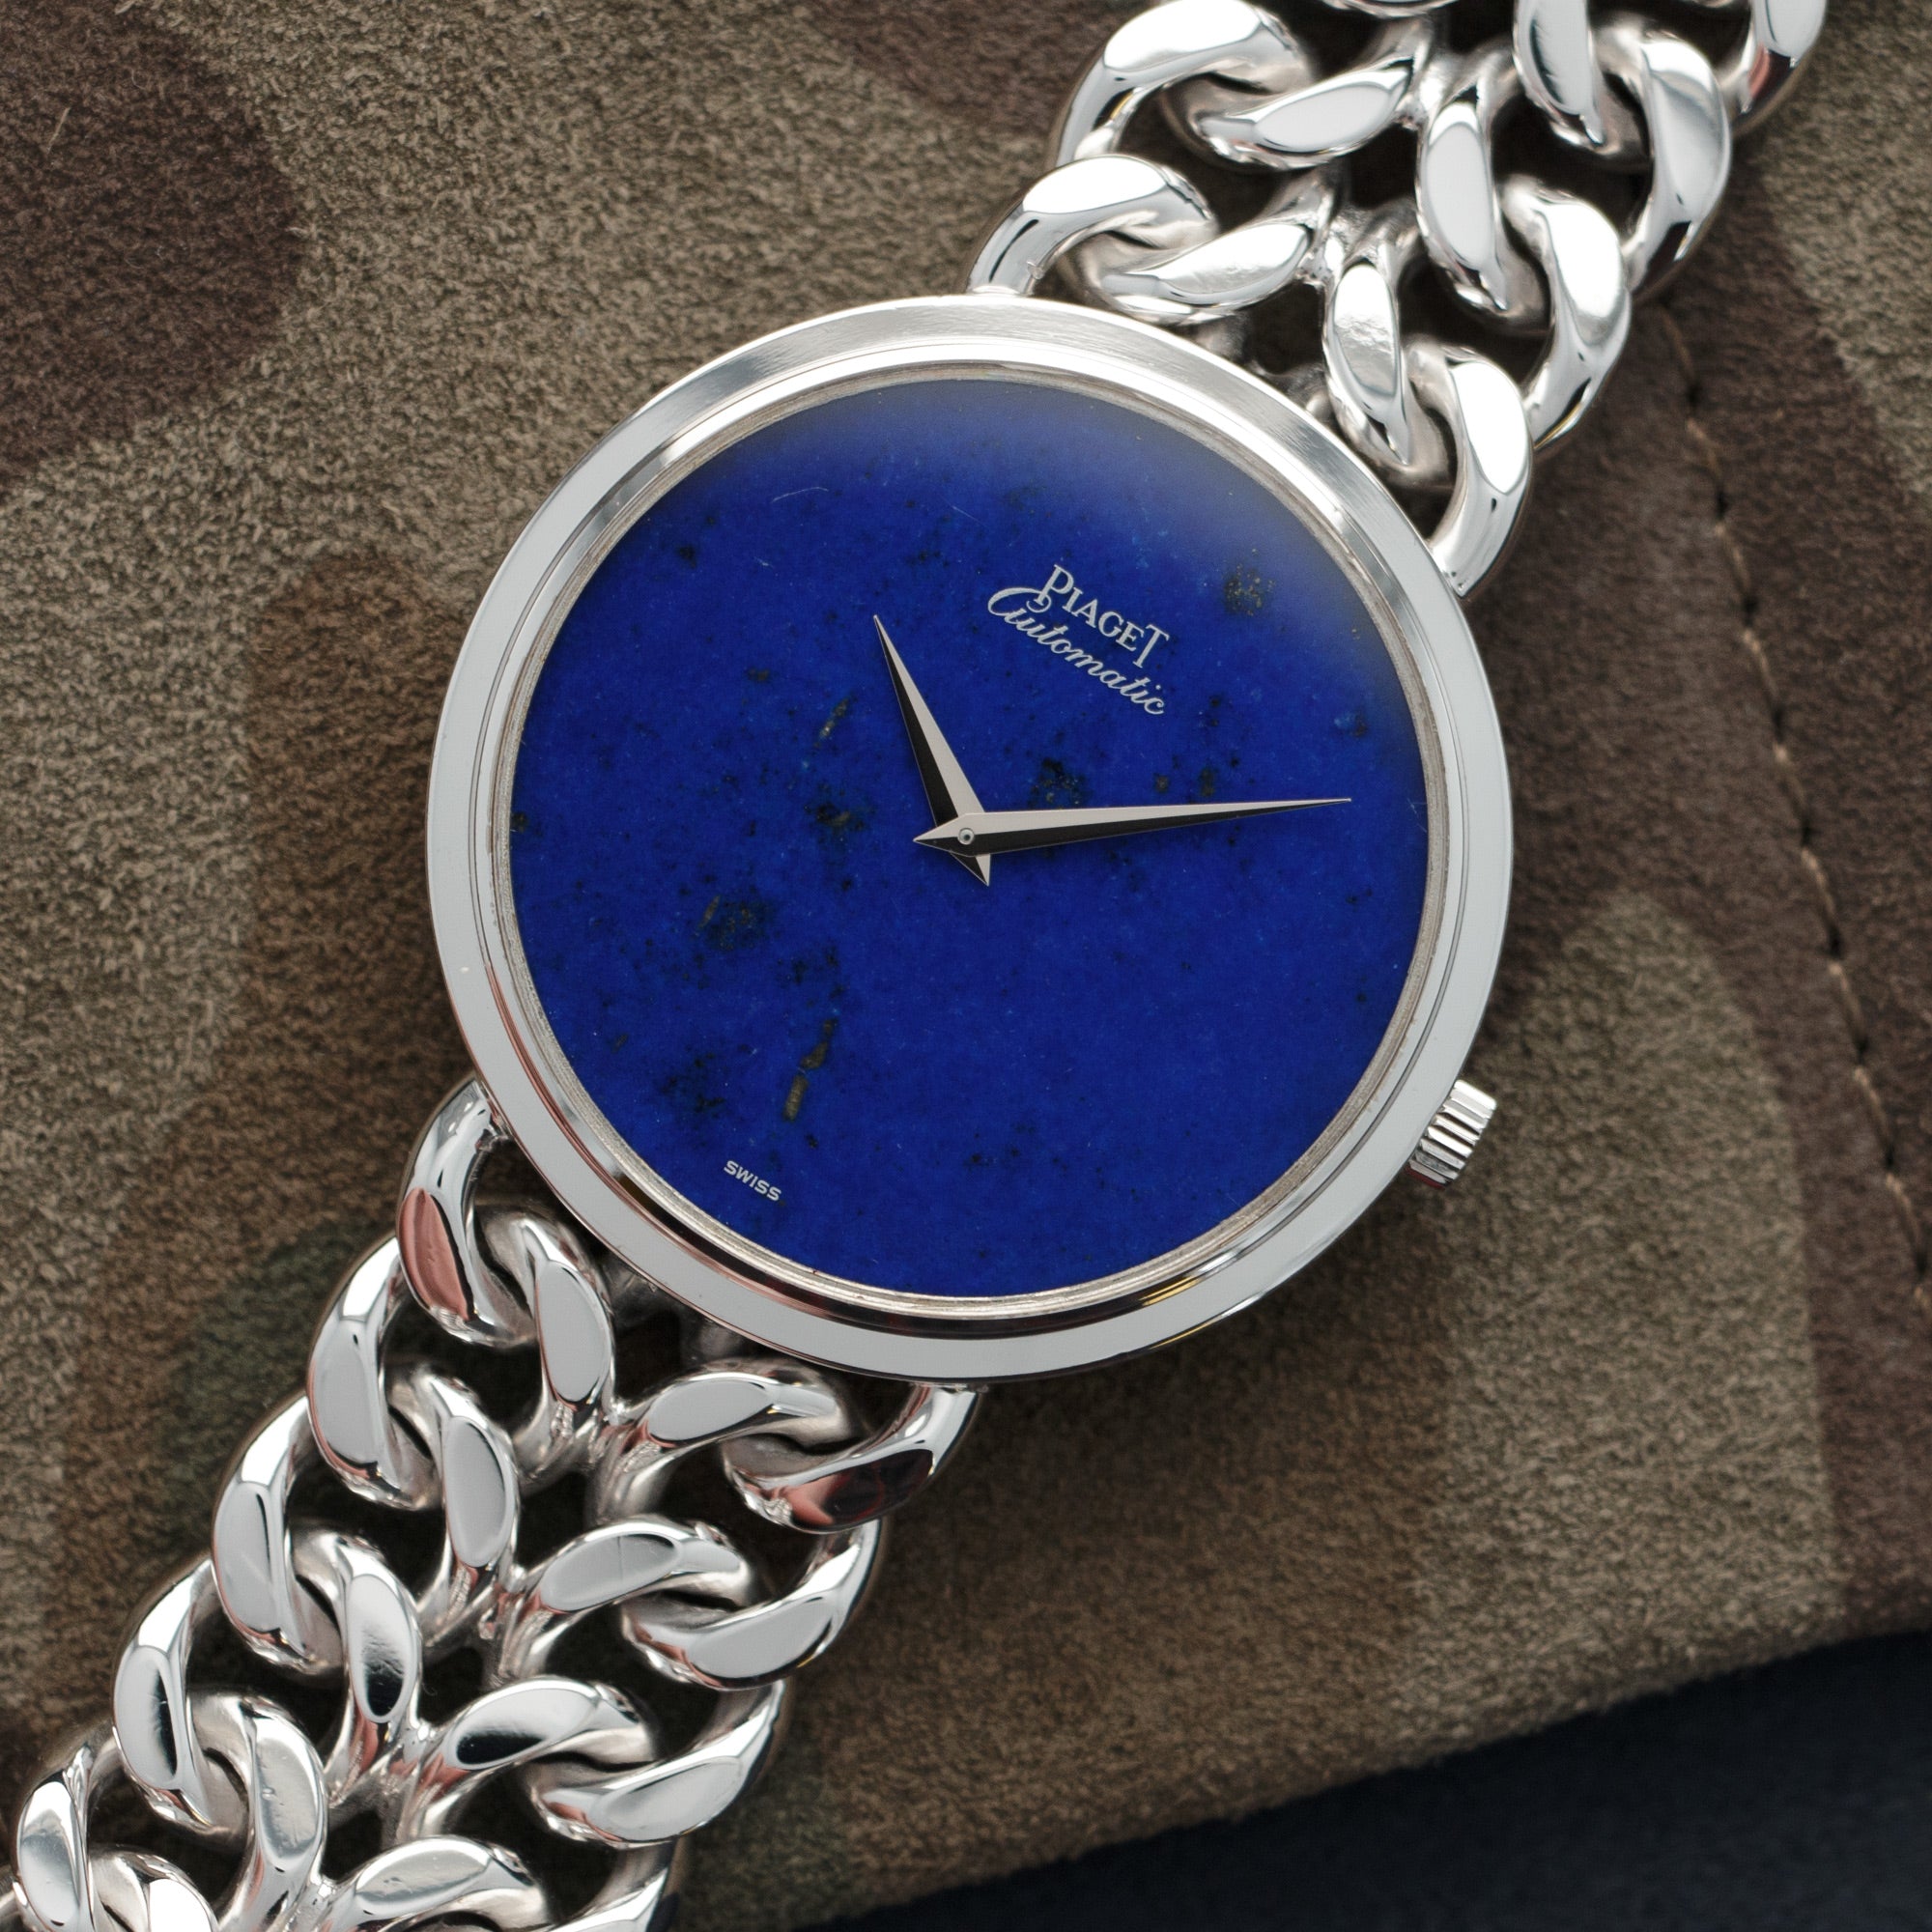 Piaget - Piaget White Gold Lapis Link Bracelet Watch - The Keystone Watches